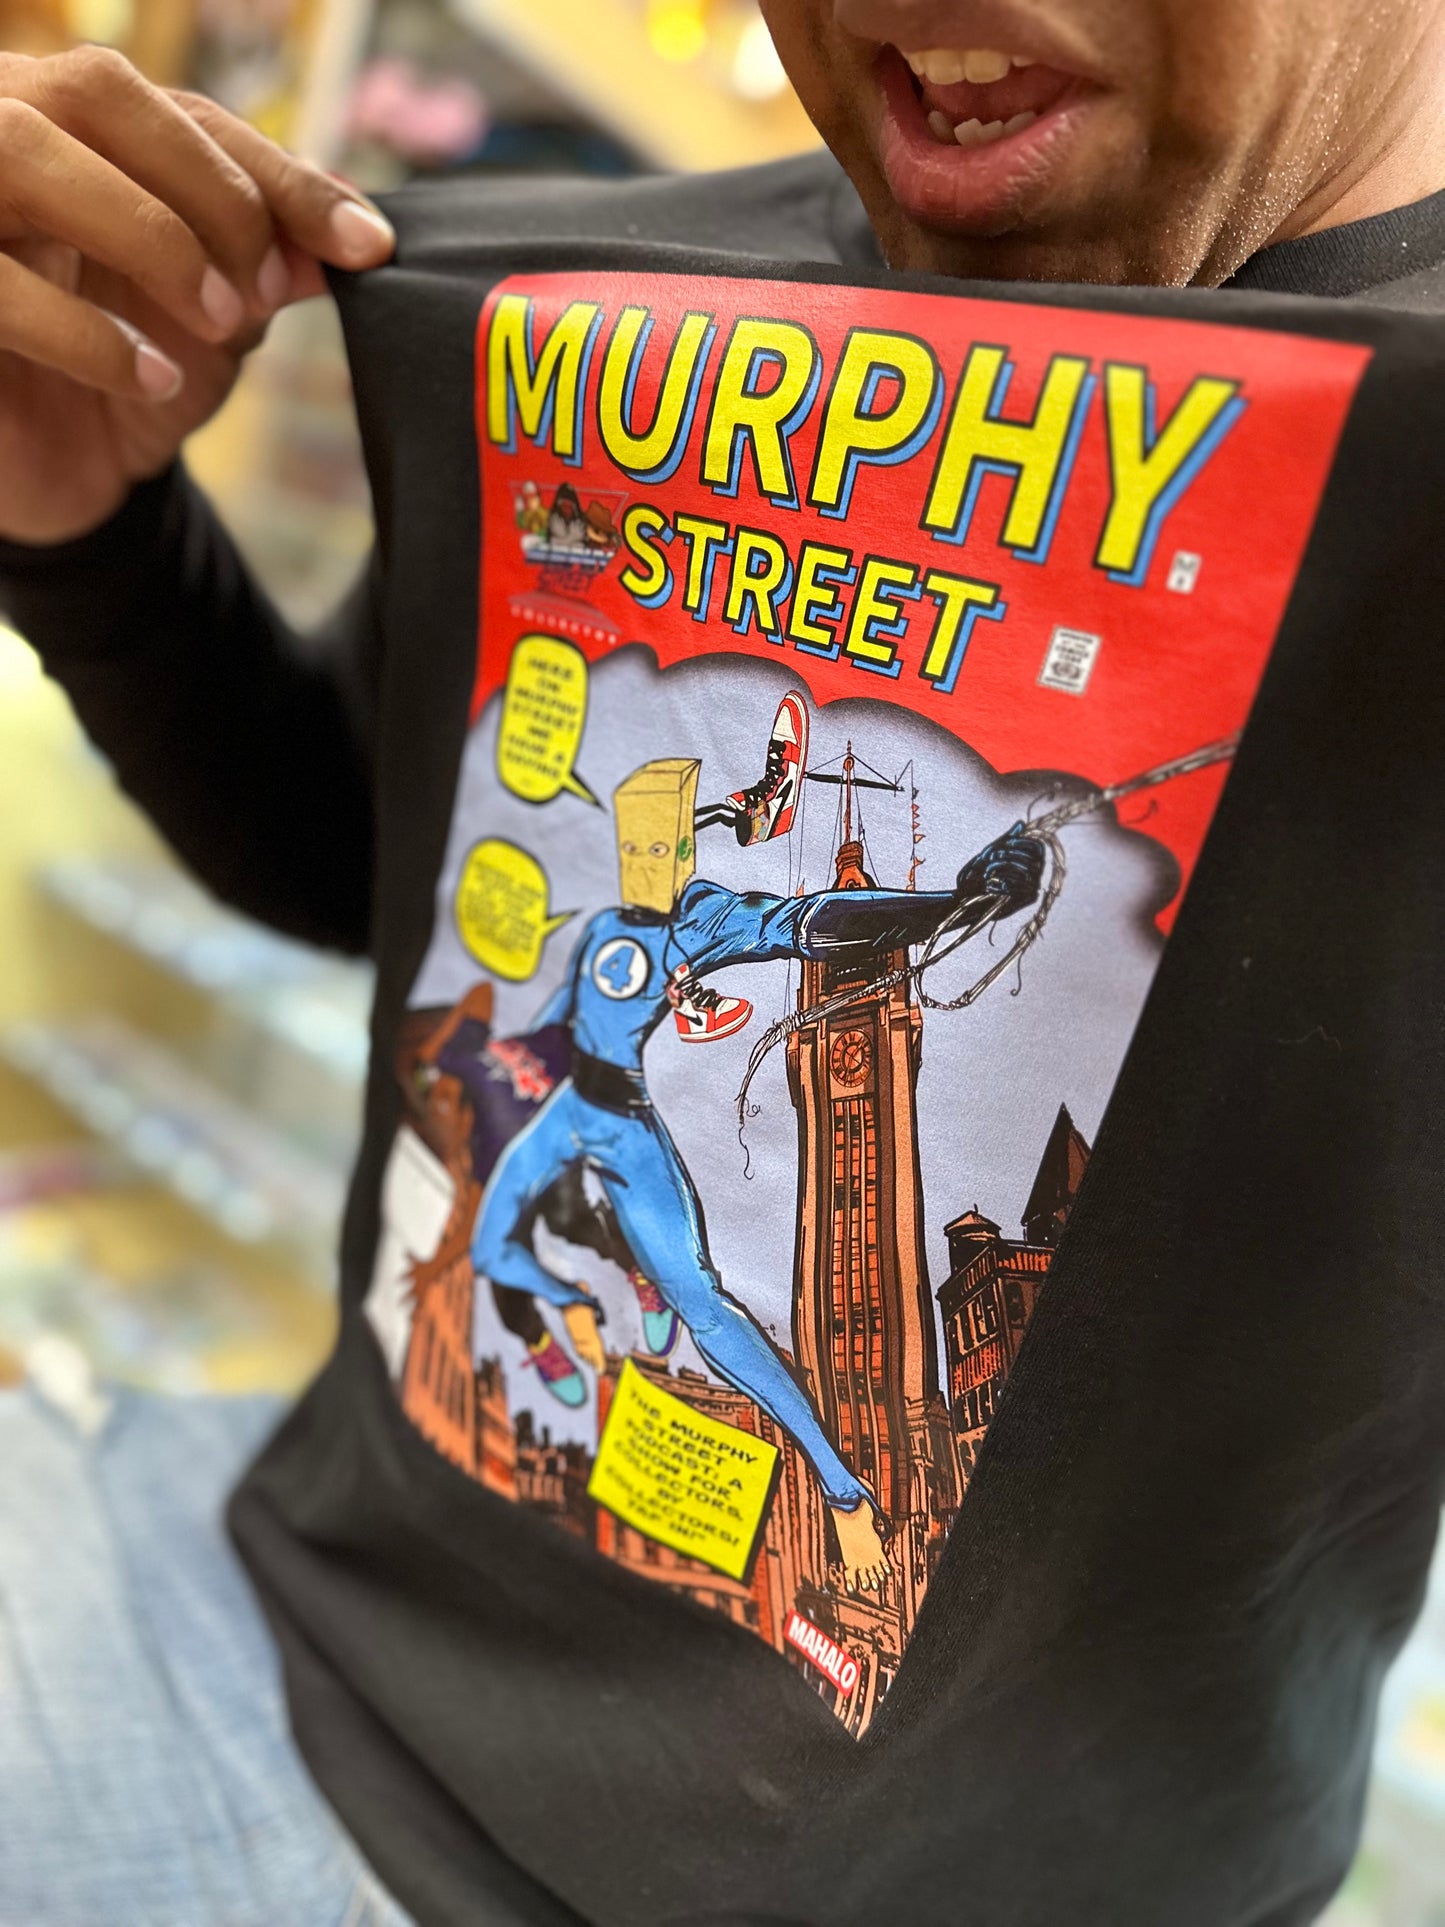 Murphy Street x Pancho Abalos Collabo Long Sleeve Shirt